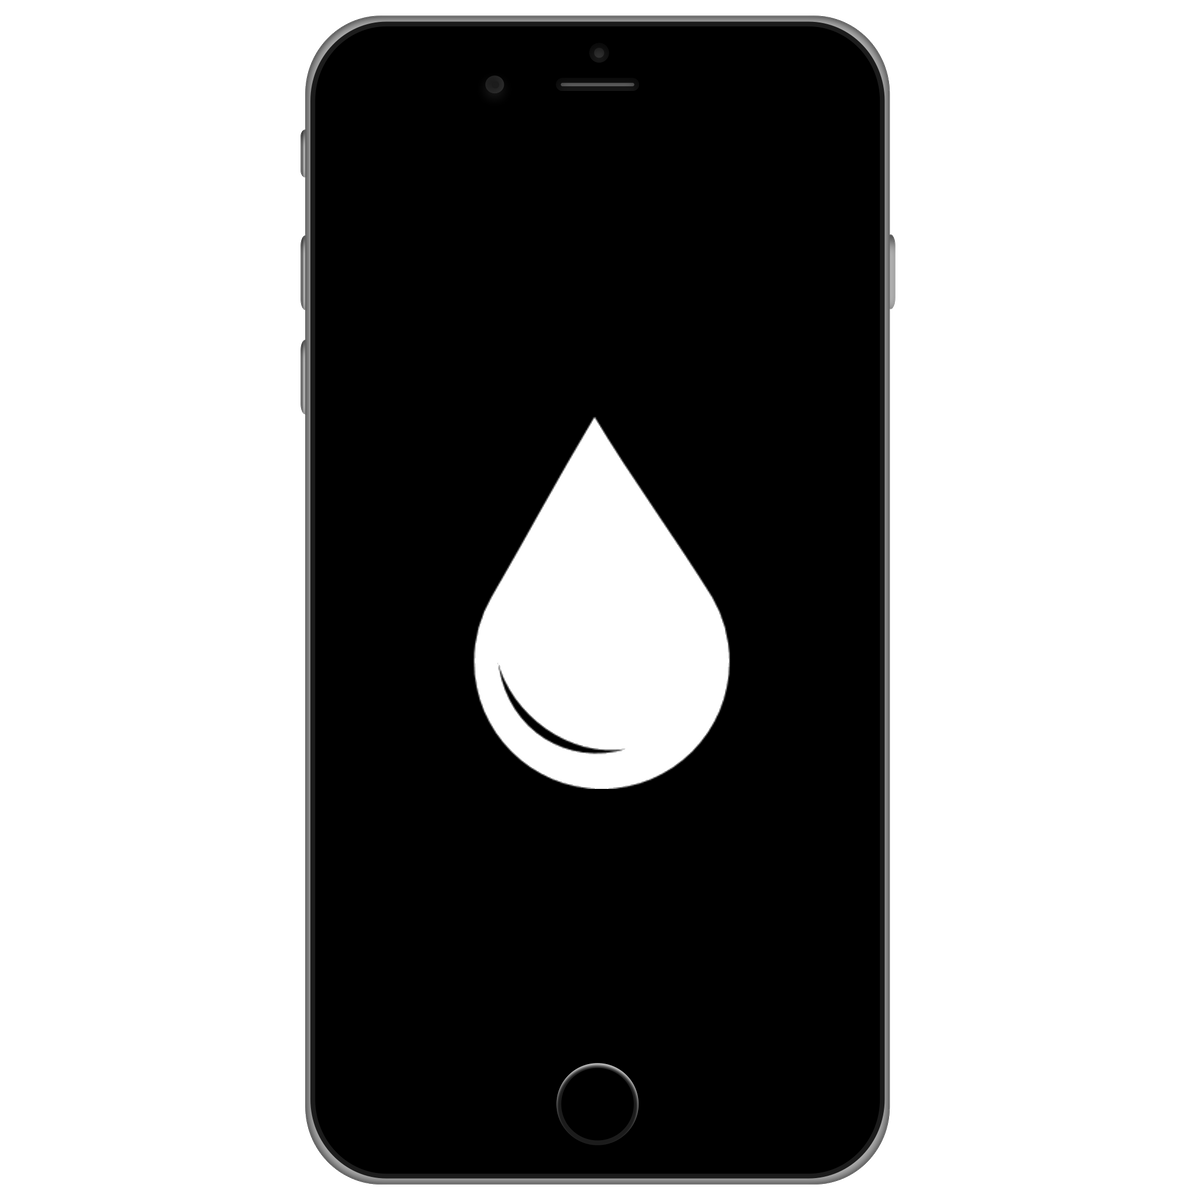 Repair iPhone Xs Max Water Damage - TechPros